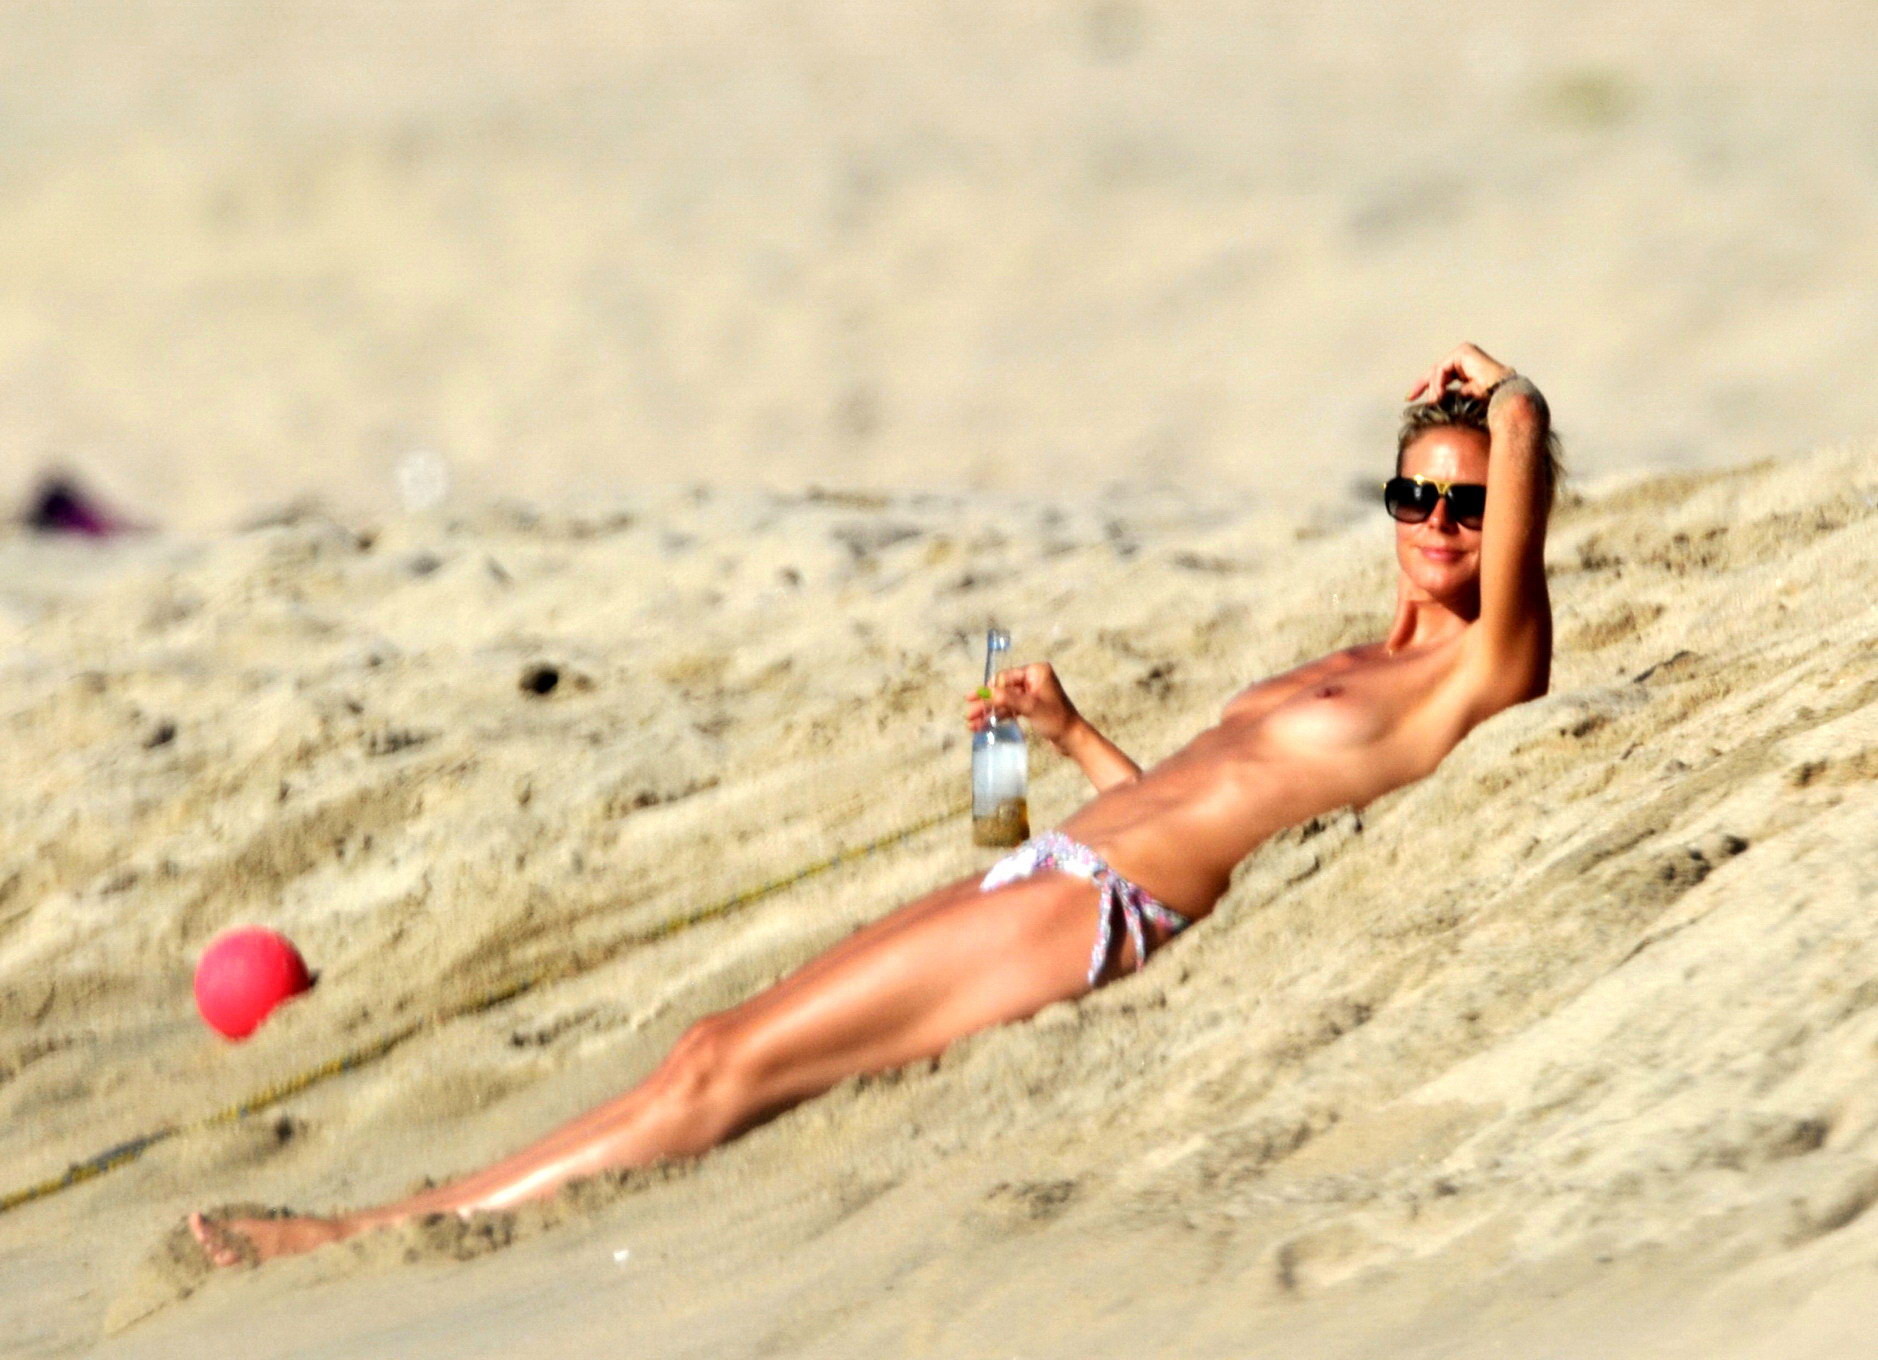 Heidi Klum tanning topless on a sandy beach in Corsica #75293296